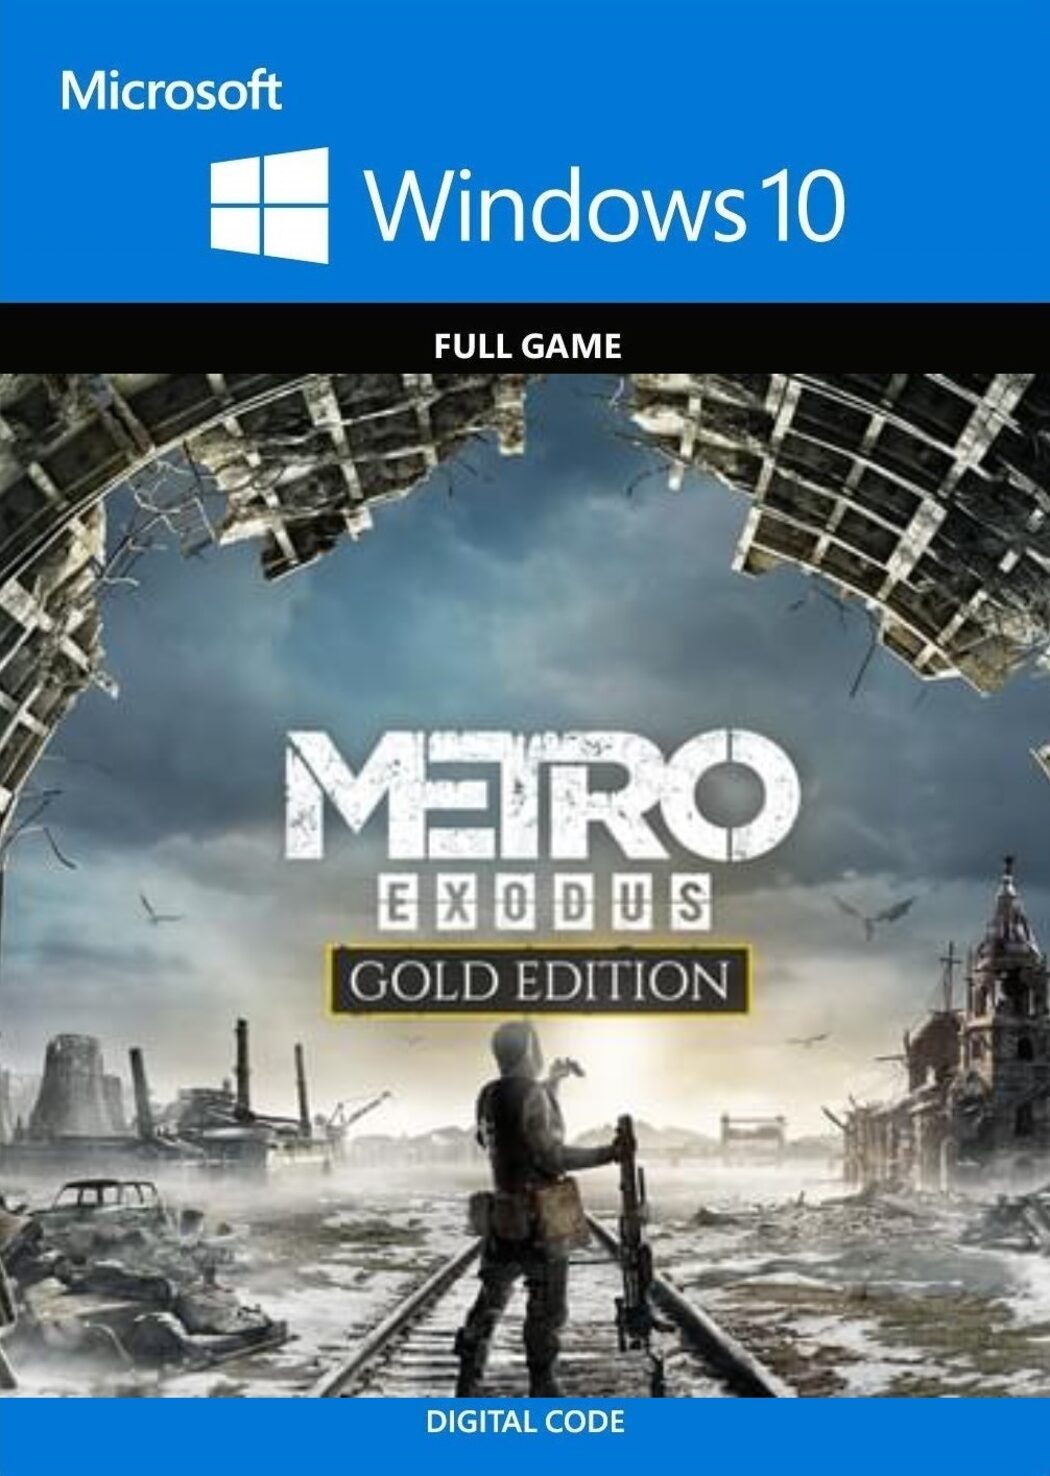 Метро эксодус голд. Метро Эксодус Голд эдишн. Metro Exodus Gold Edition Steam. Metro Exodus обложка. Metro Exodus Gold Edition вертикальная ориентация.